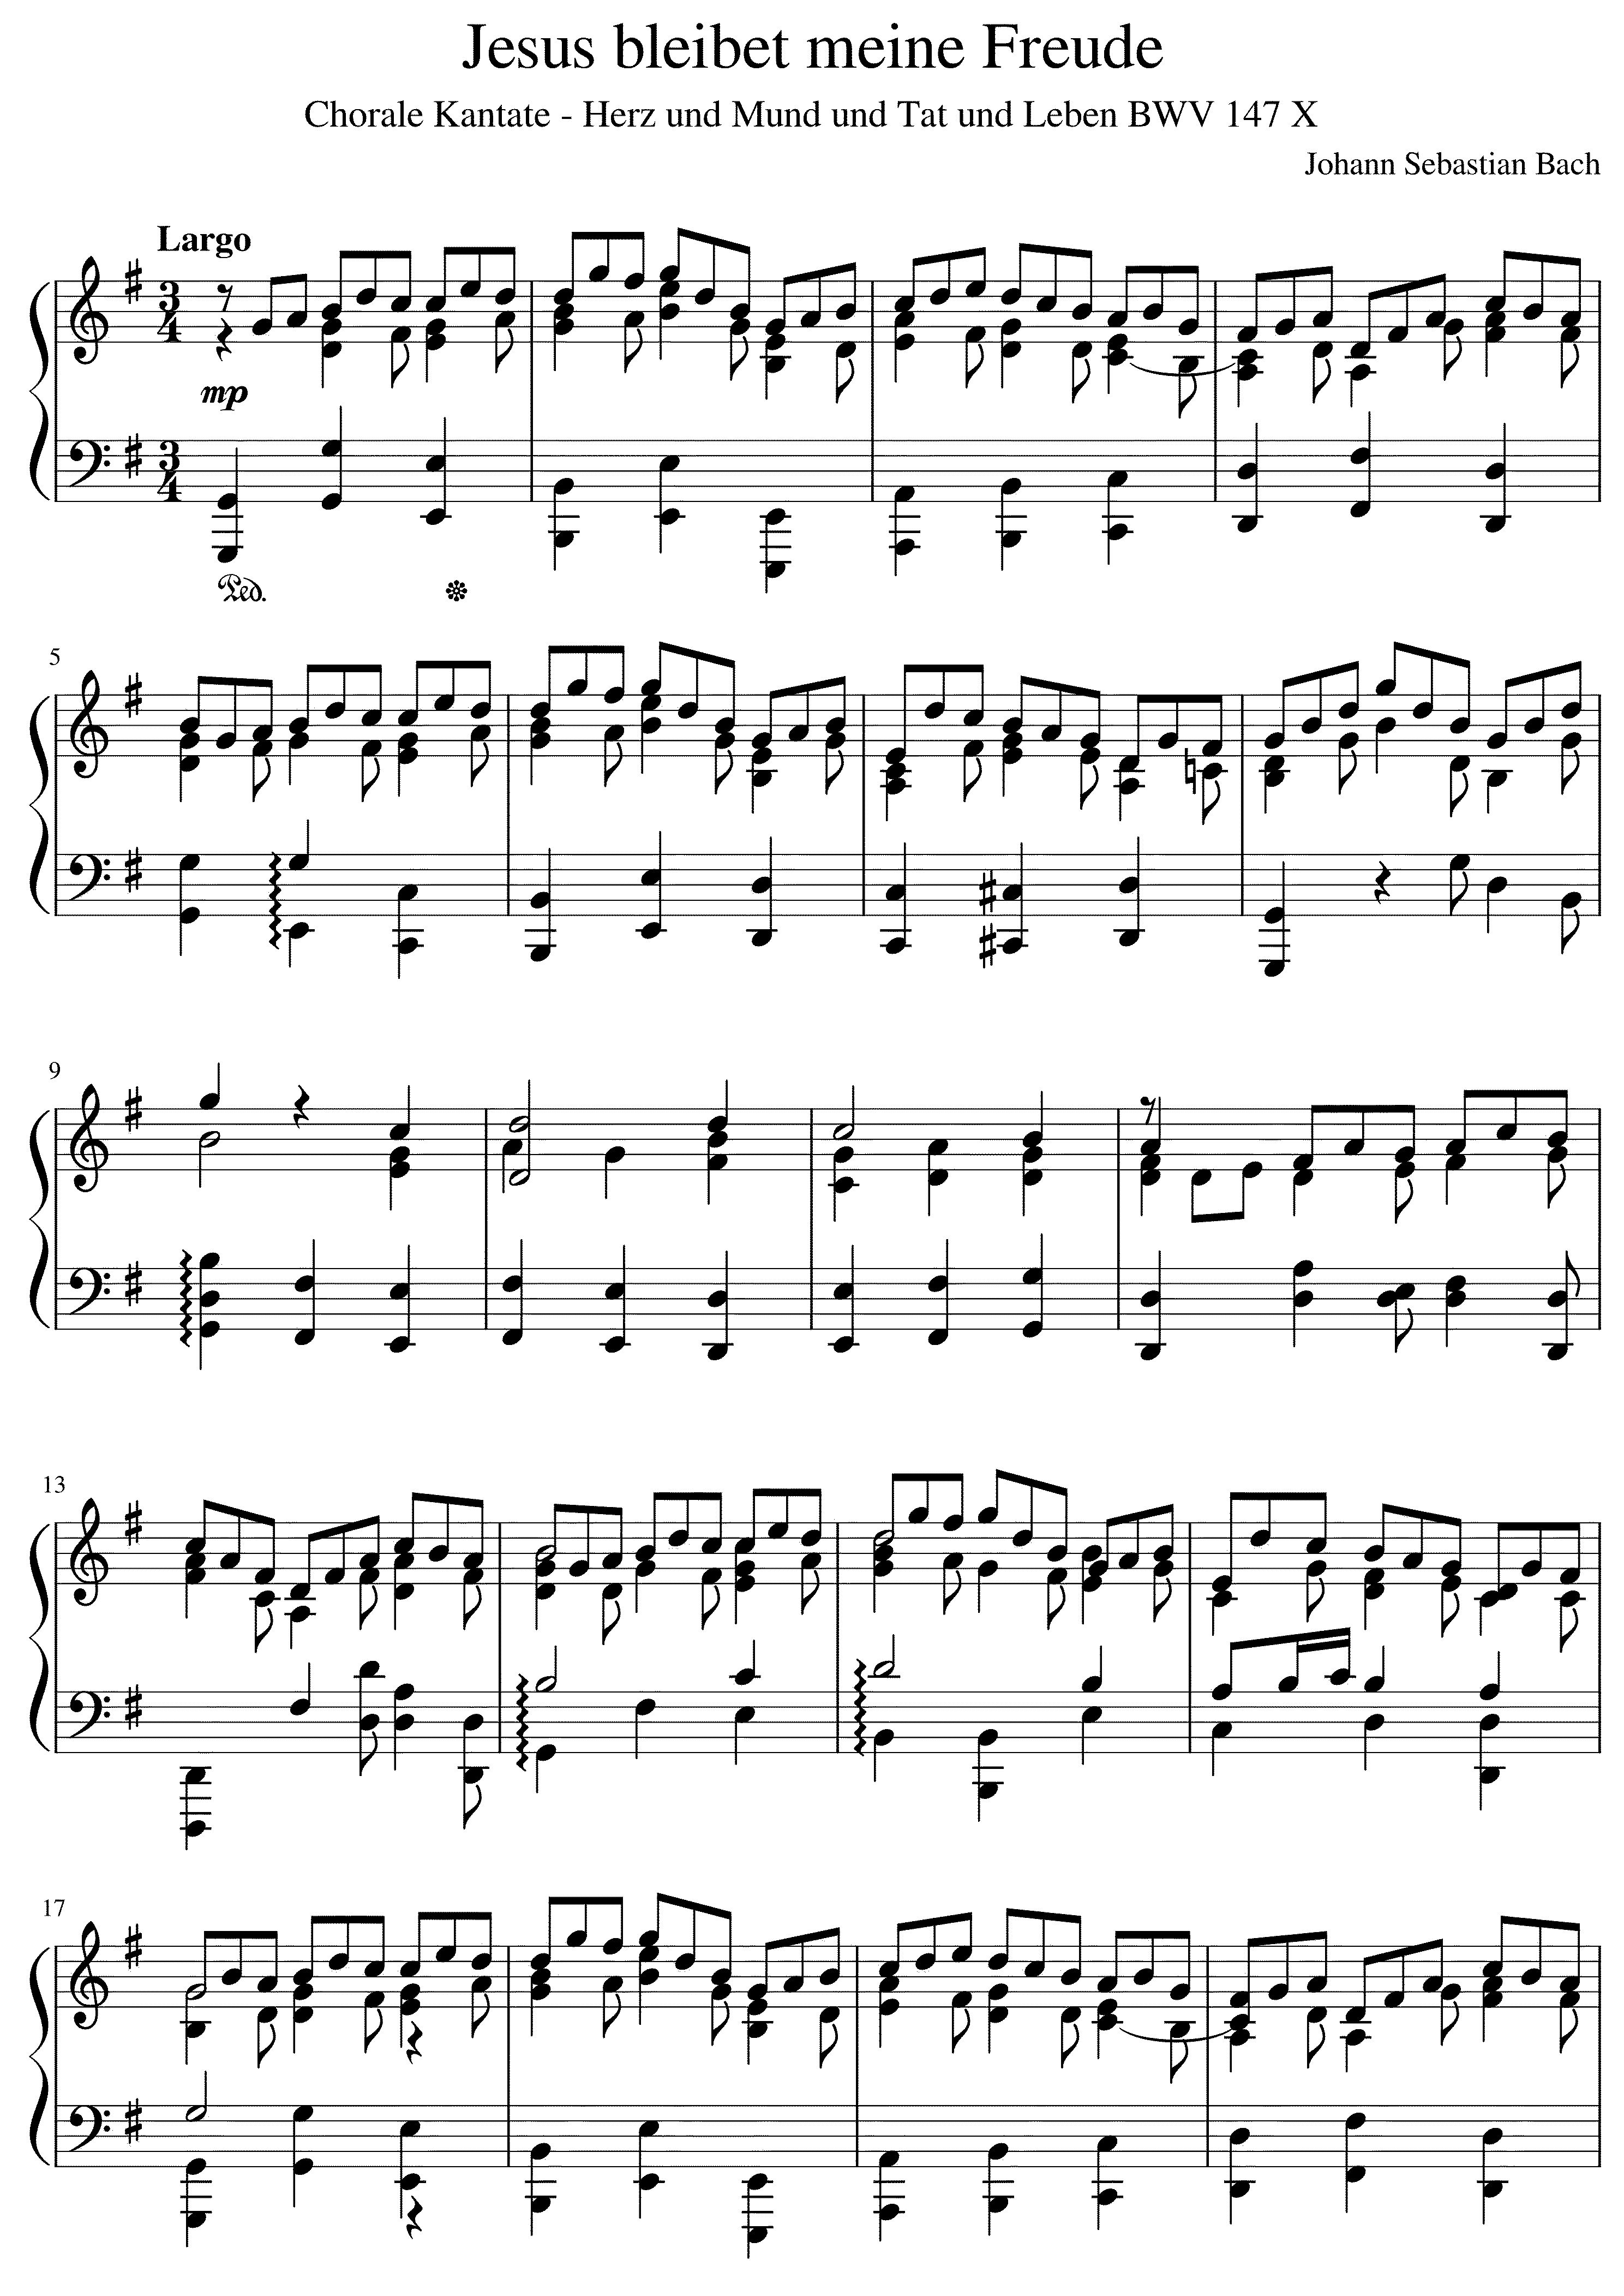 Partitura Bach 147